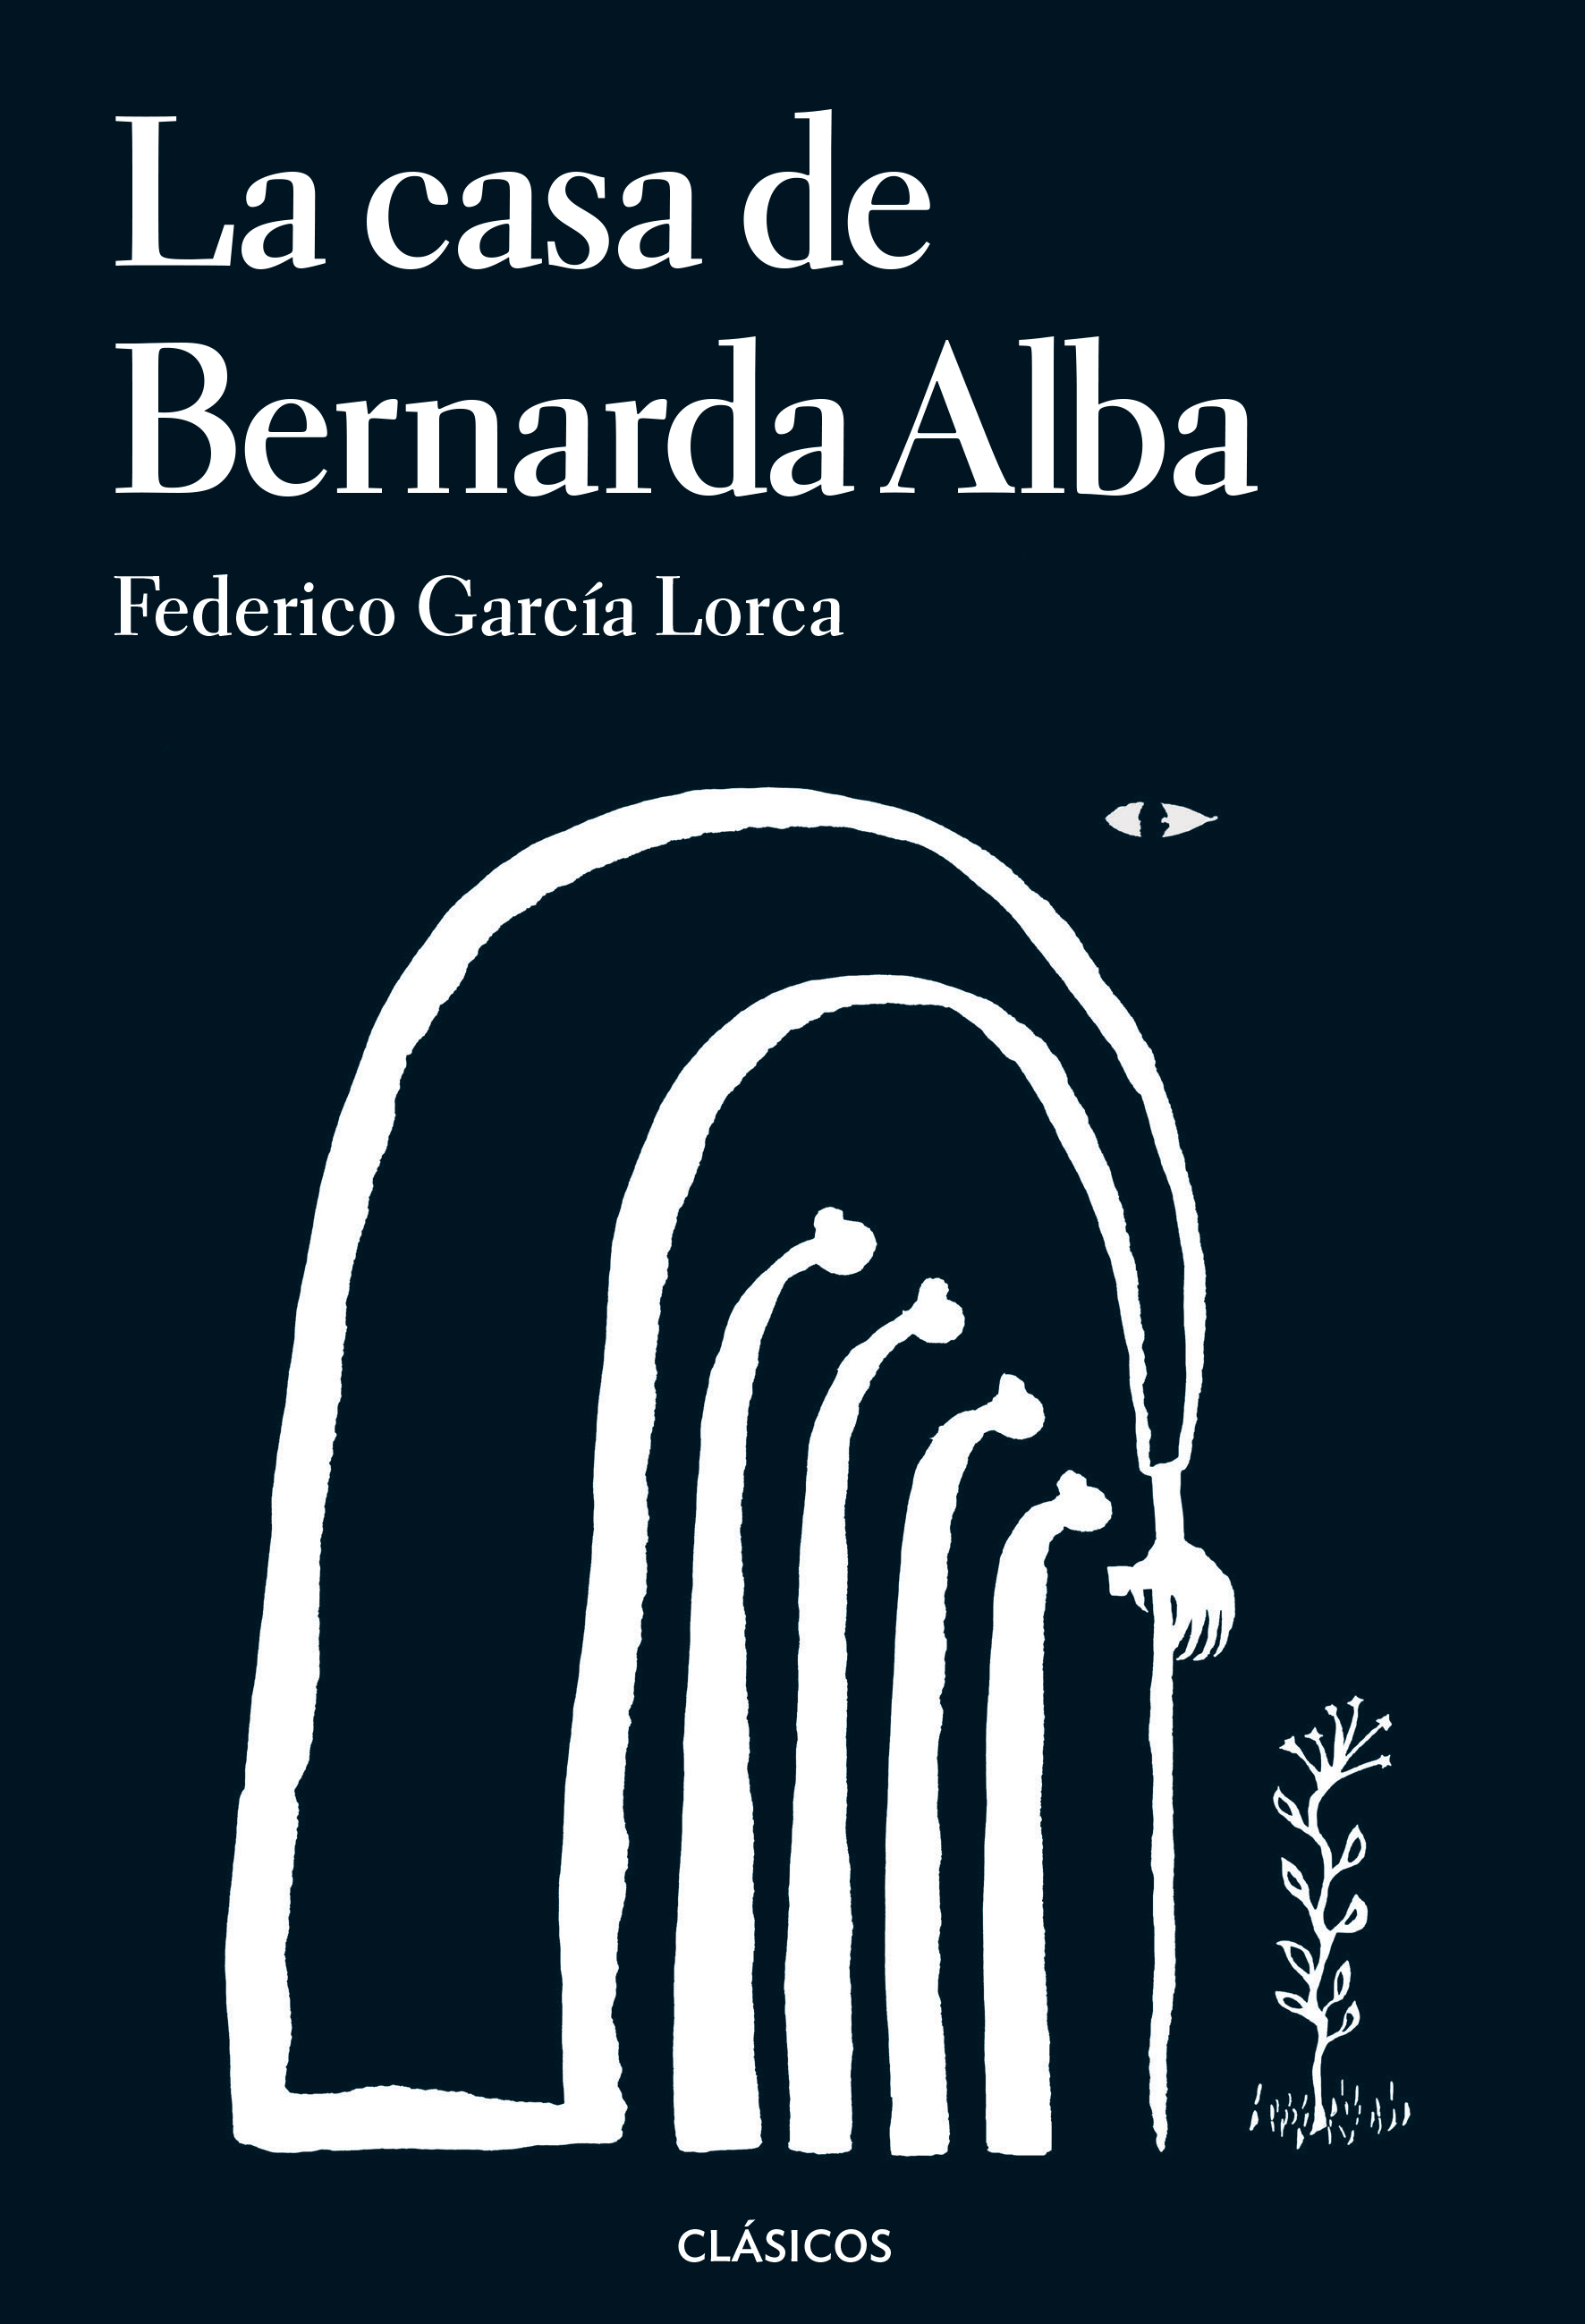 A Study Of Image, Symbol, And Theme In La Casa De Bernarda